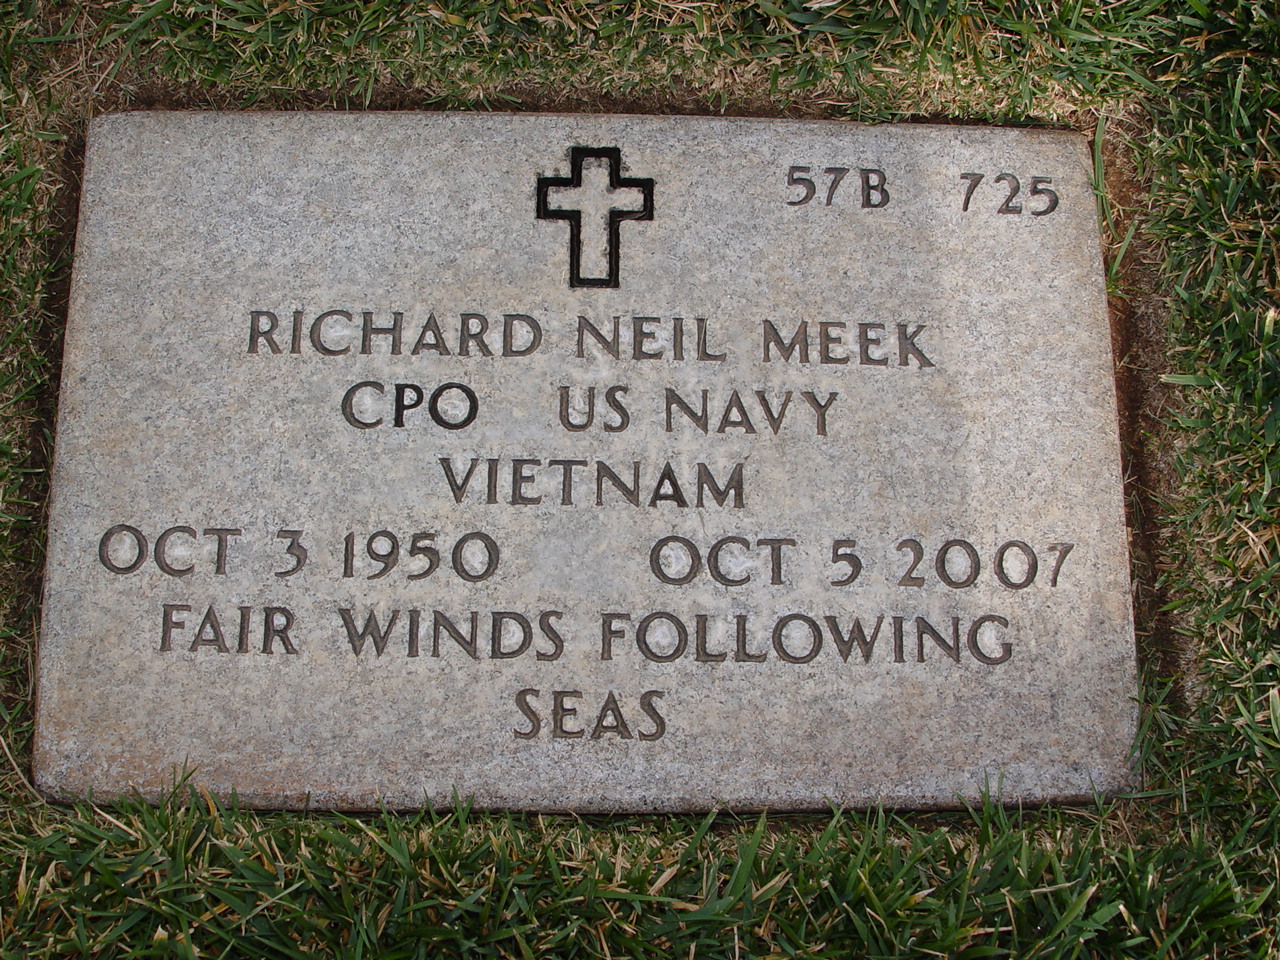 Richard Neil Meek final resting